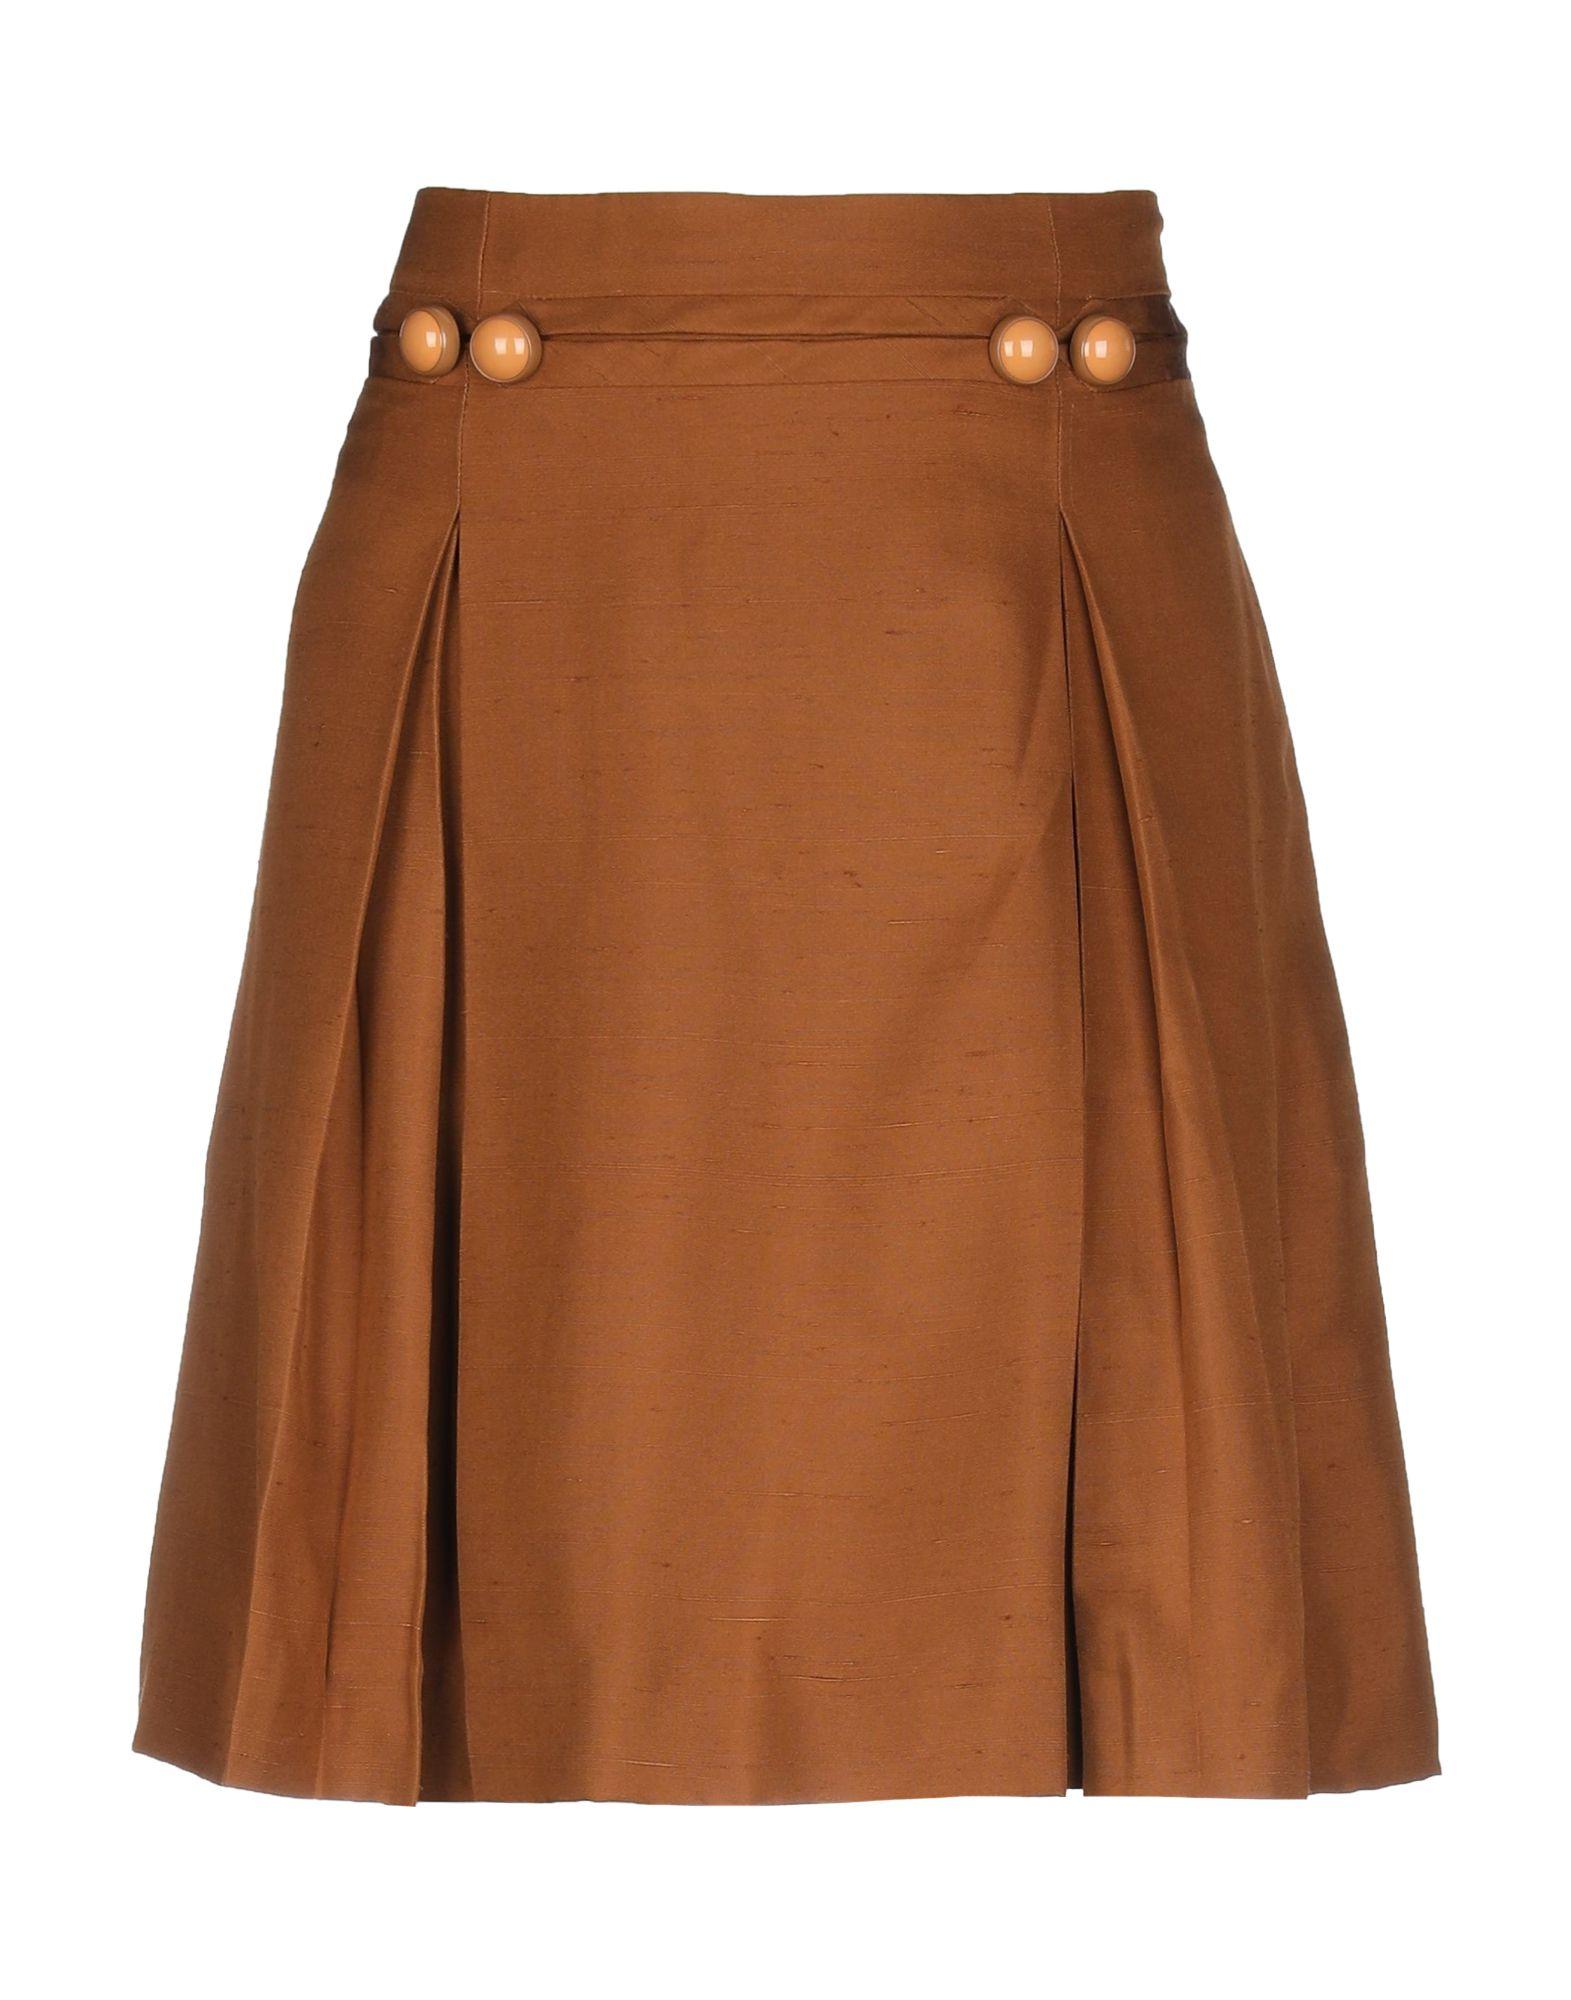 Chloé Silk Knee Length Skirt in Camel (Brown) - Lyst